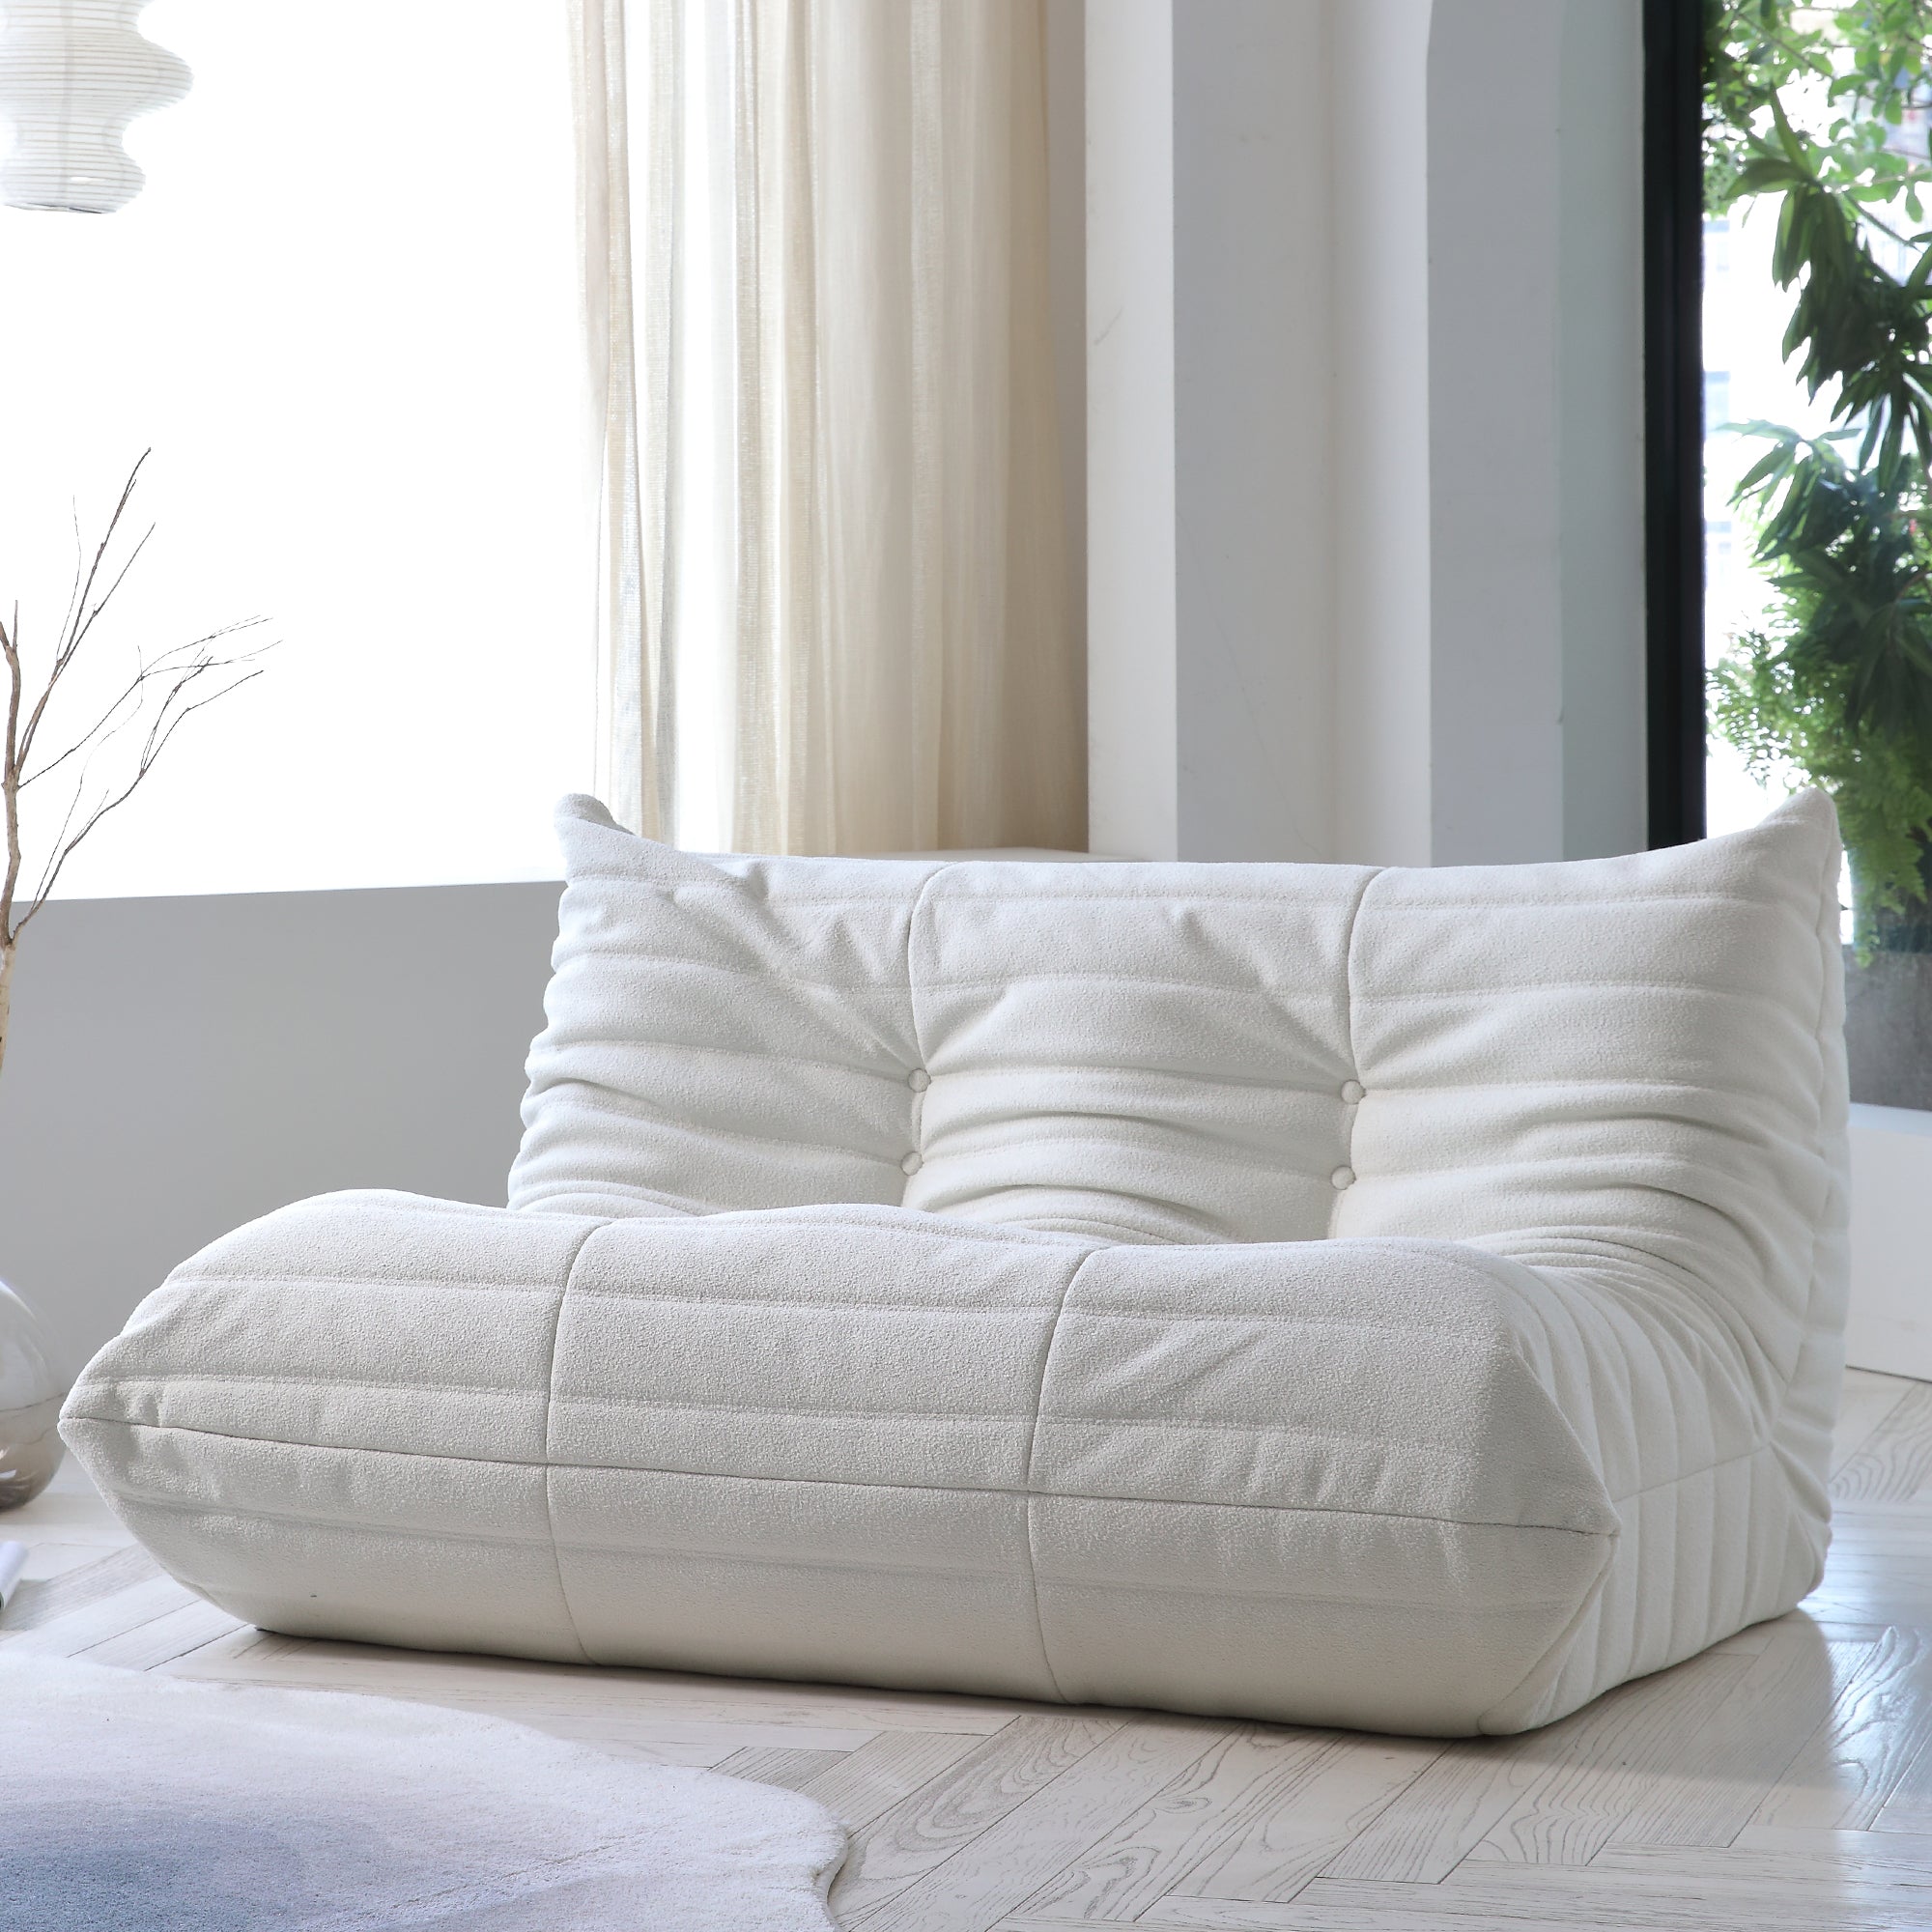 Michel Ducaroy - Togo Sofa : Buy Design Furniture Online On